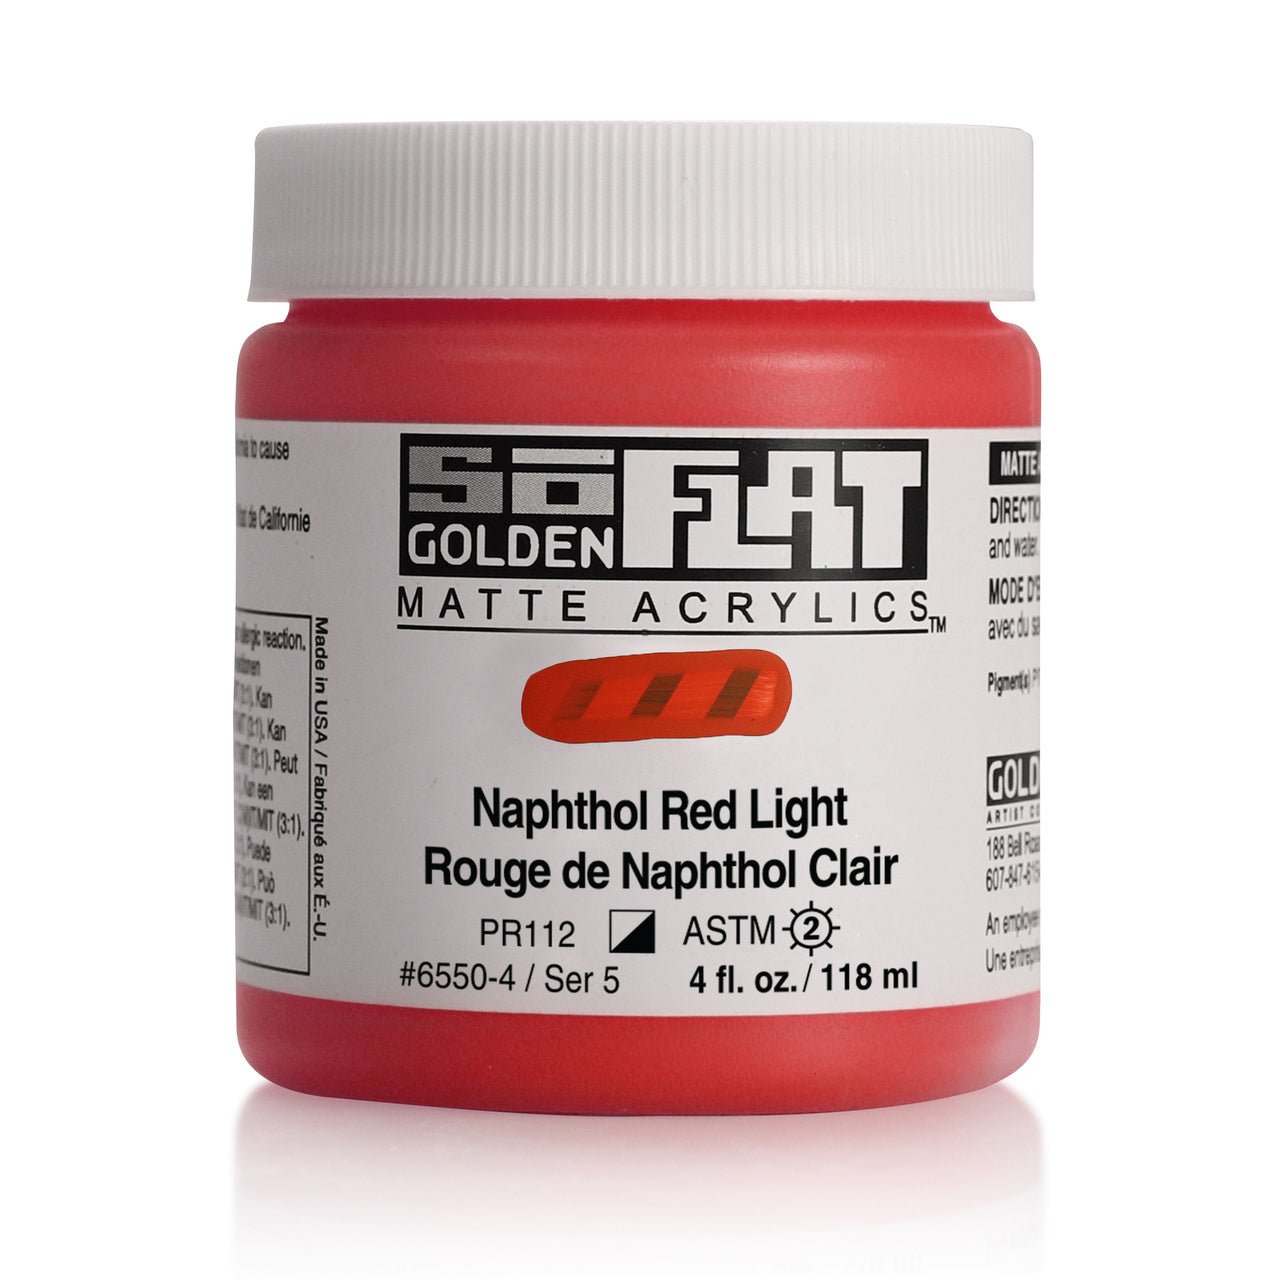 Golden SoFlat Matte Acrylic Paint - Naphthol Red Light 4 oz jar - merriartist.com